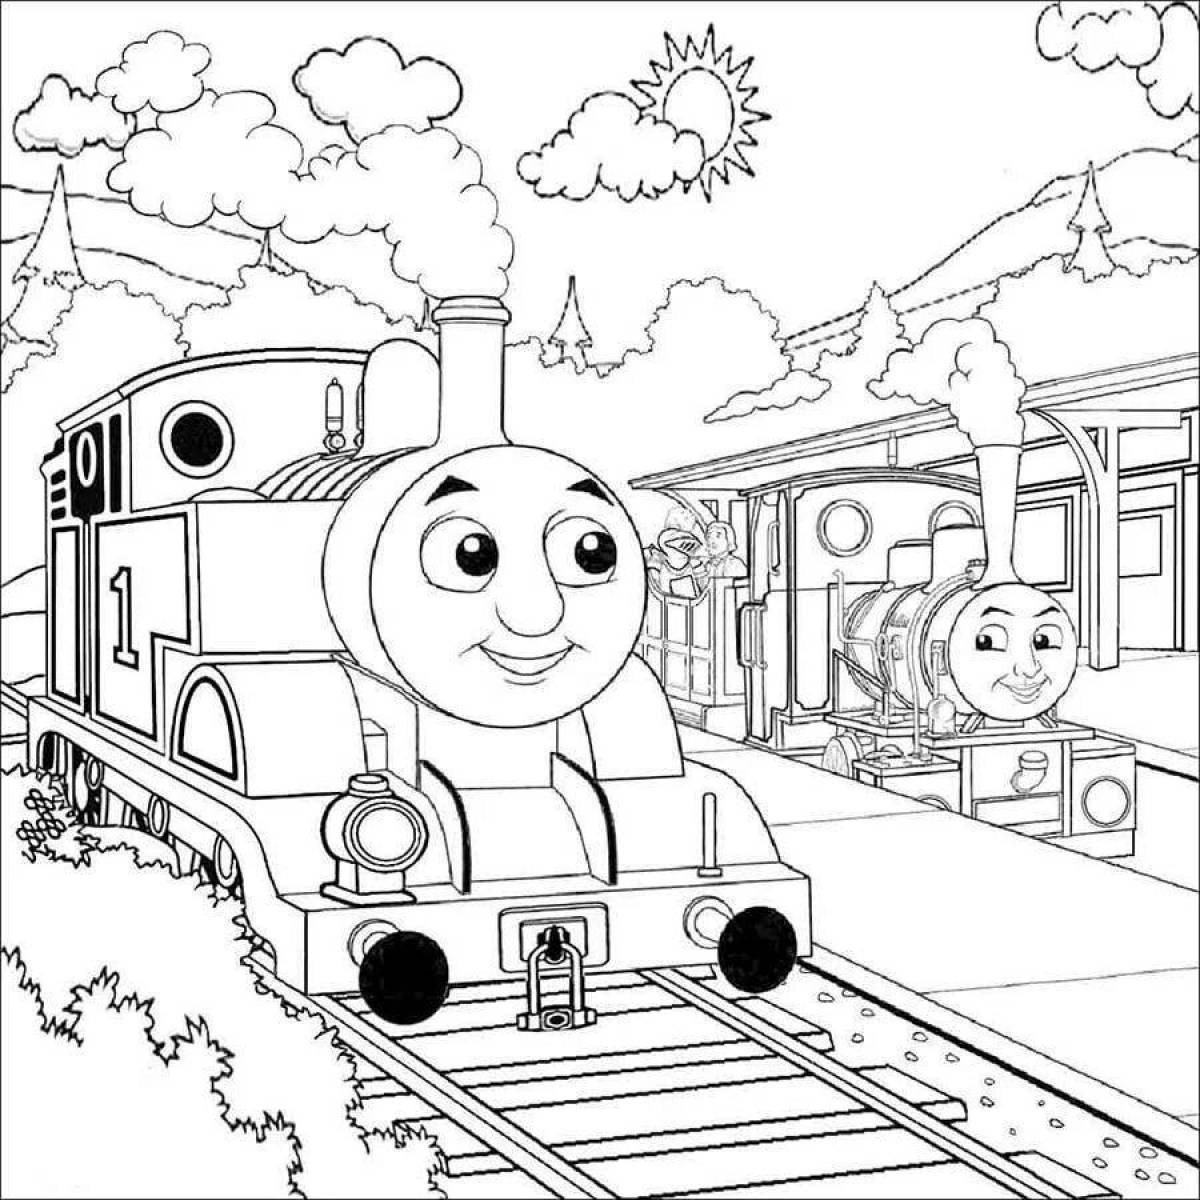 Spectacle train cartoon